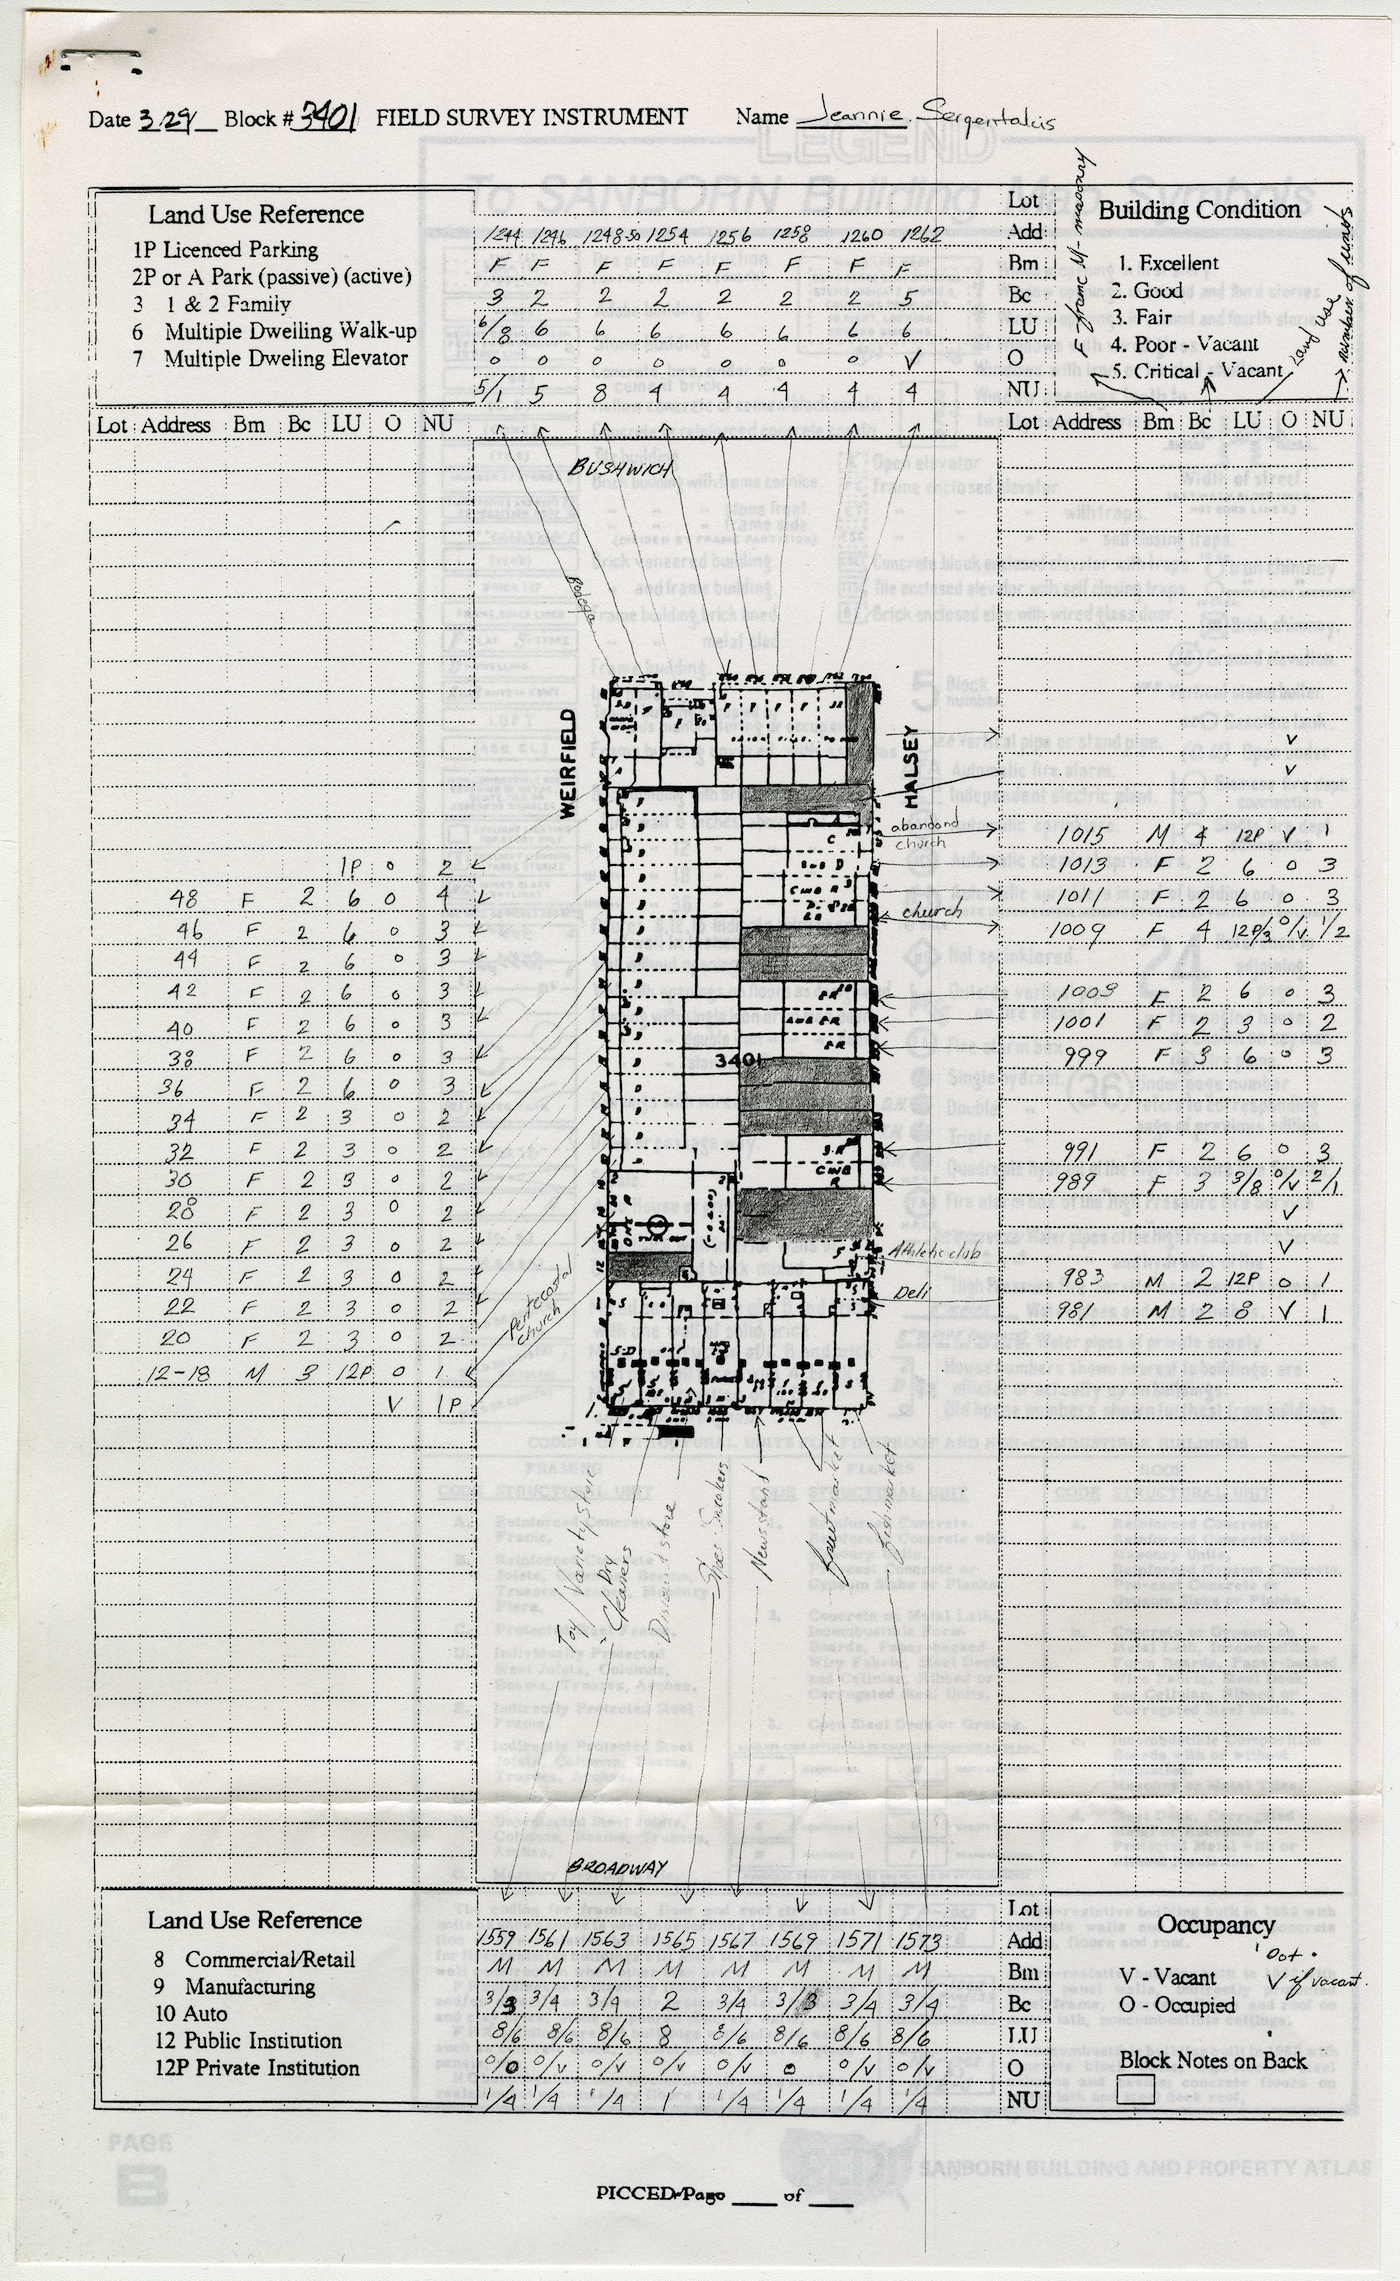 Land Use and Building Condition Surveys (1989) (Ronald Shiffman collection on the Pratt Center for Community Development, 2013.023, Box 59, Folder 3; Brooklyn Historical Society)